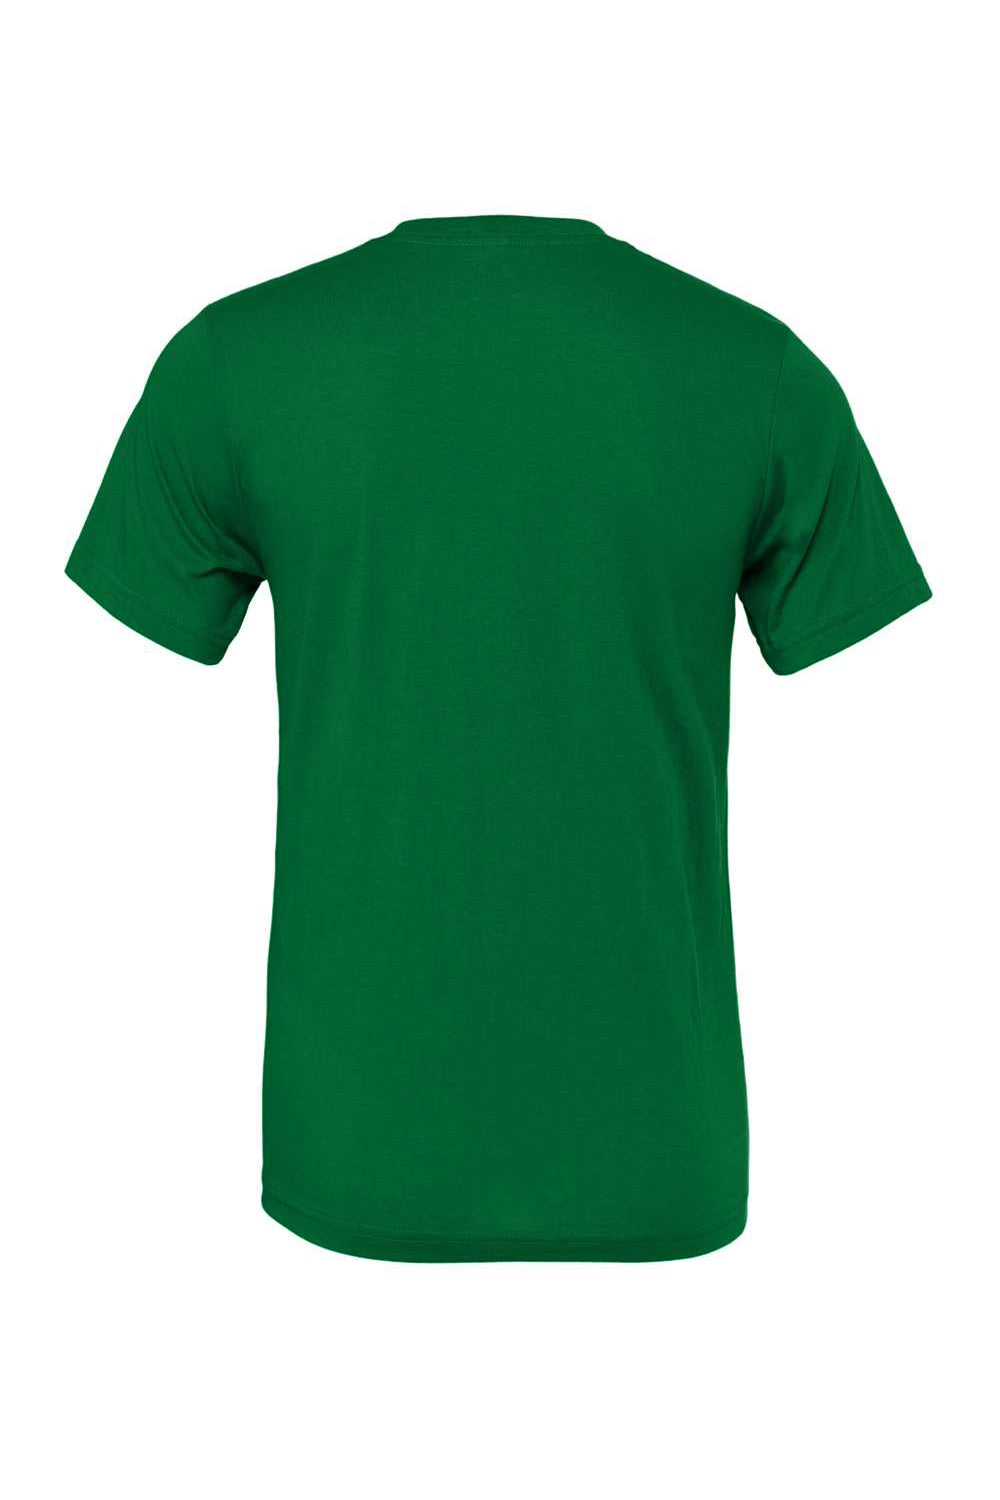 Bella + Canvas BC3001/3001C Mens Jersey Short Sleeve Crewneck T-Shirt Kelly Green Flat Back